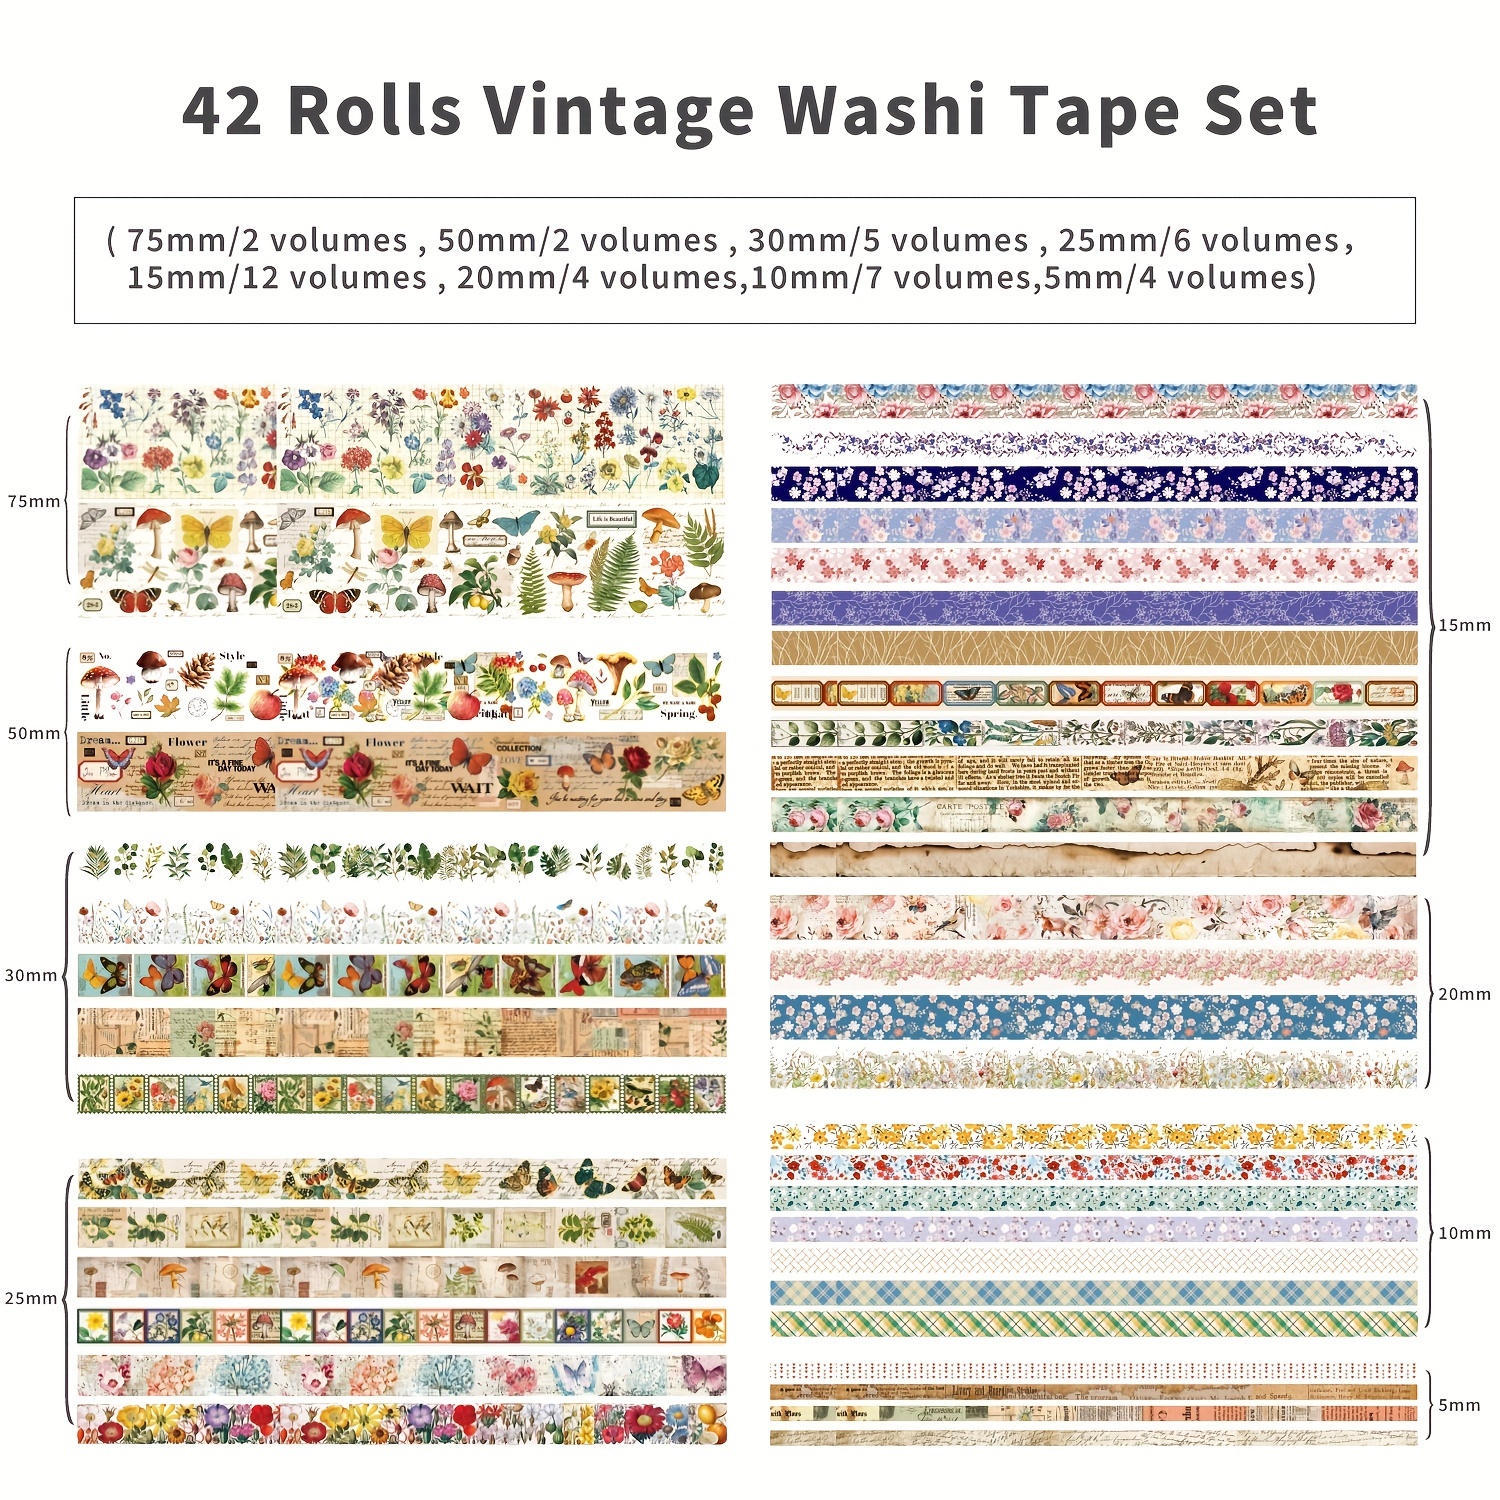 Vintage Washi Tape Set Assorted 5 Rolls of Decorative Colored